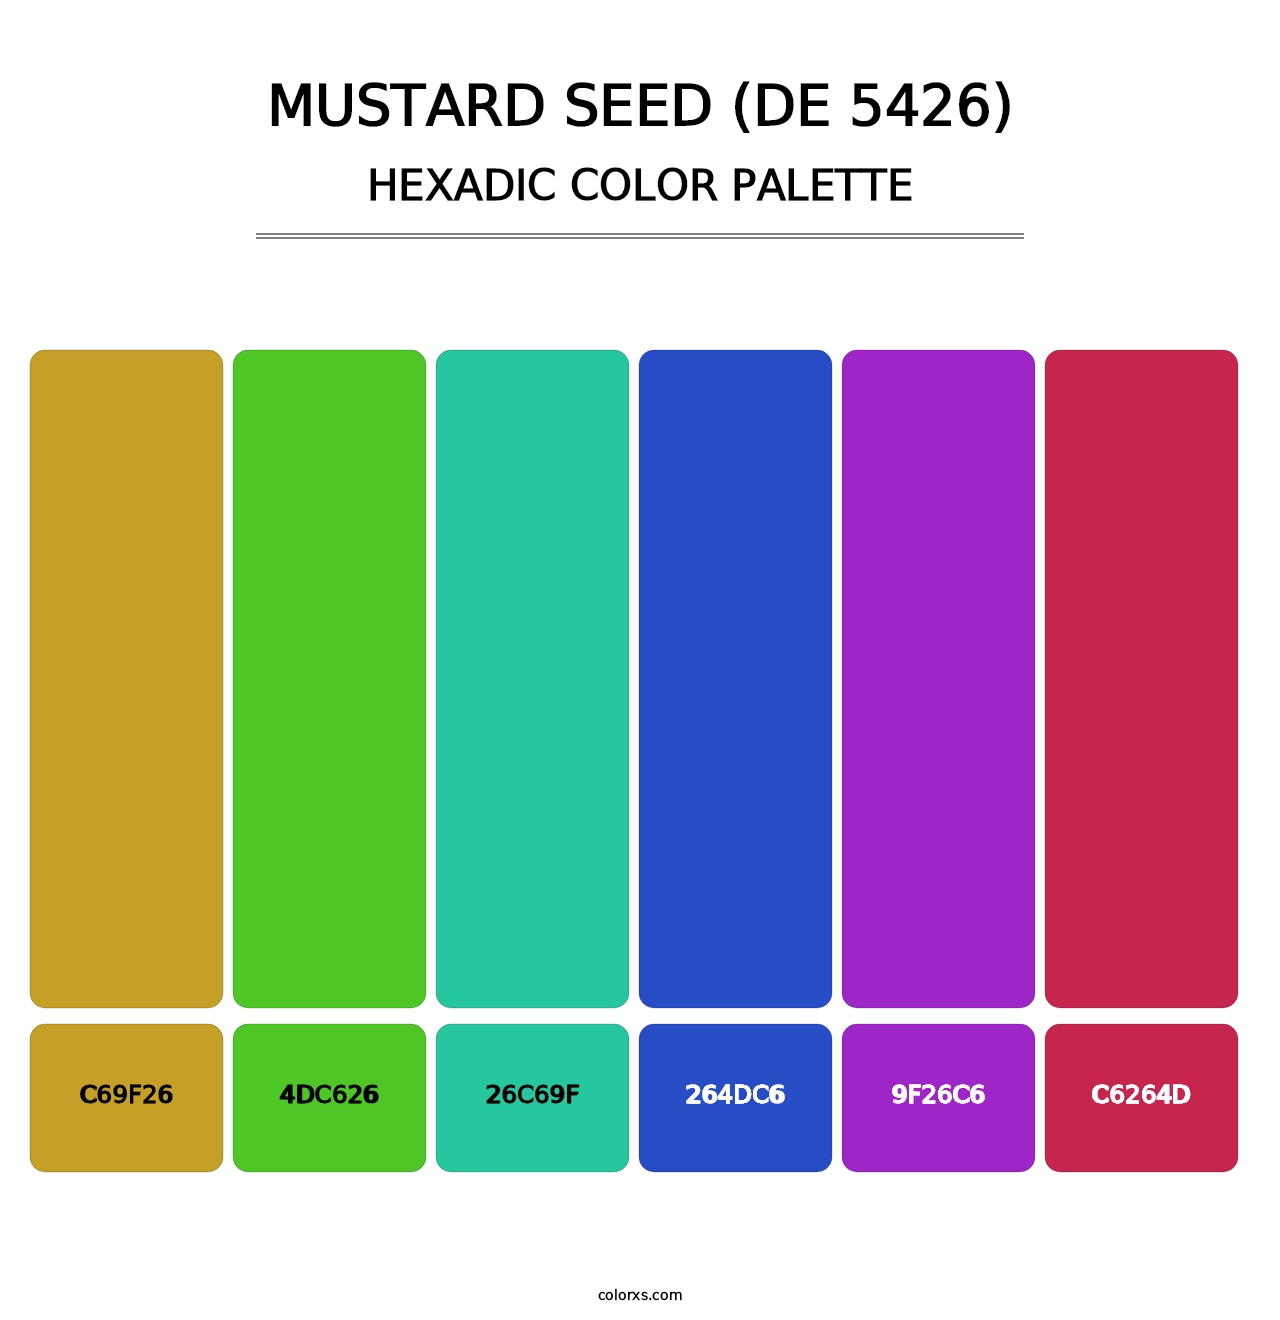 Mustard Seed (DE 5426) - Hexadic Color Palette